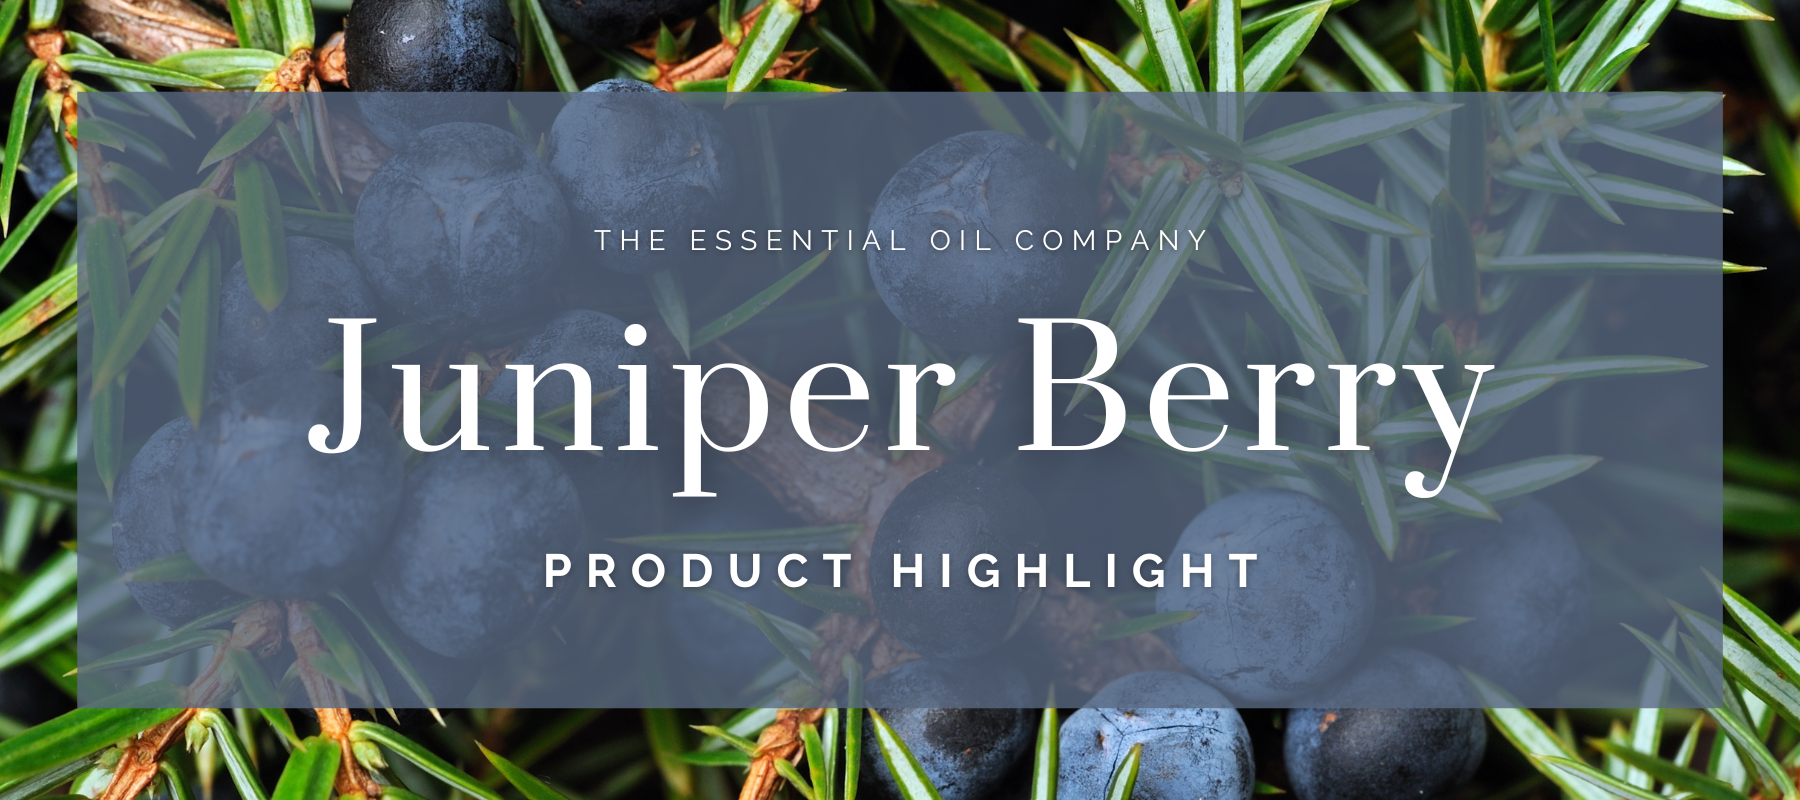 Juniper Berry: Product Highlight